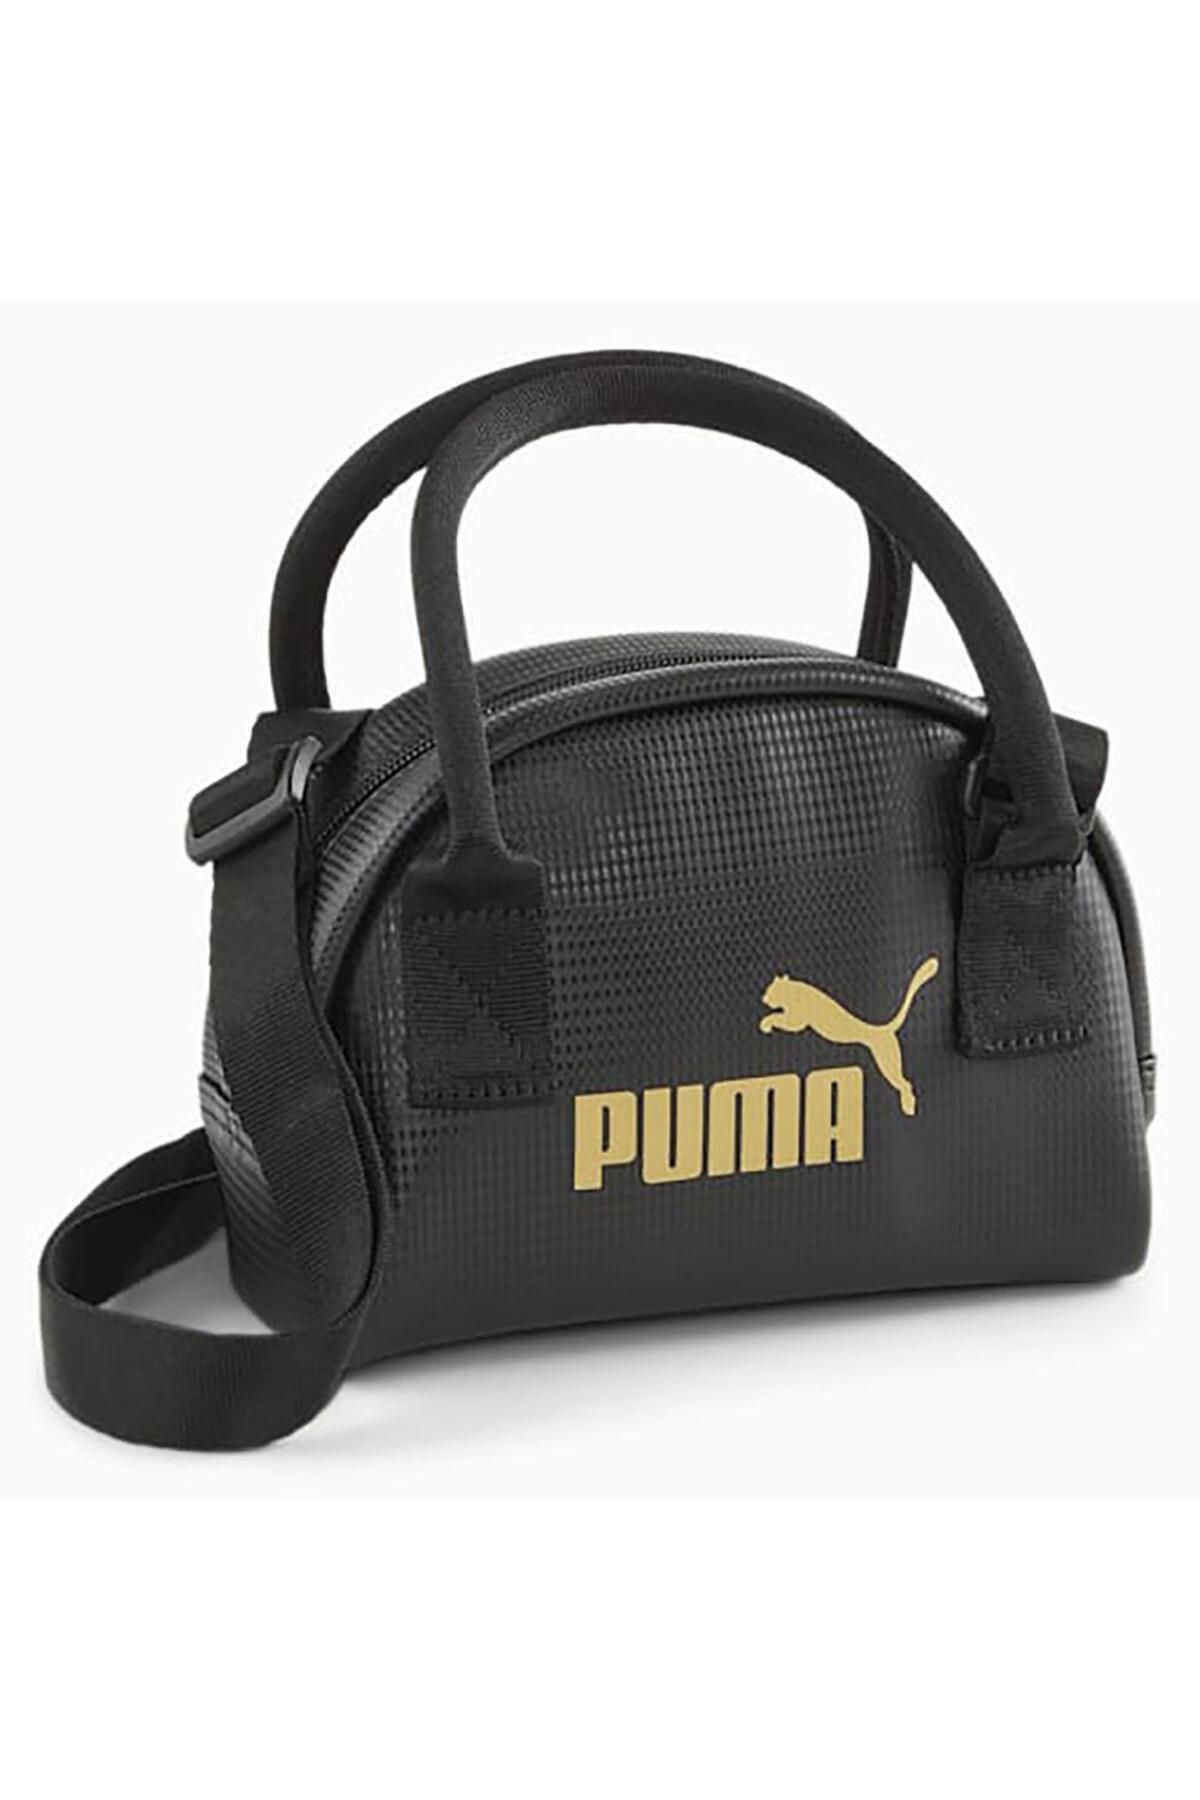 Puma Core Up Kadın Siyah Mini Omuz Çantası (090278-01)